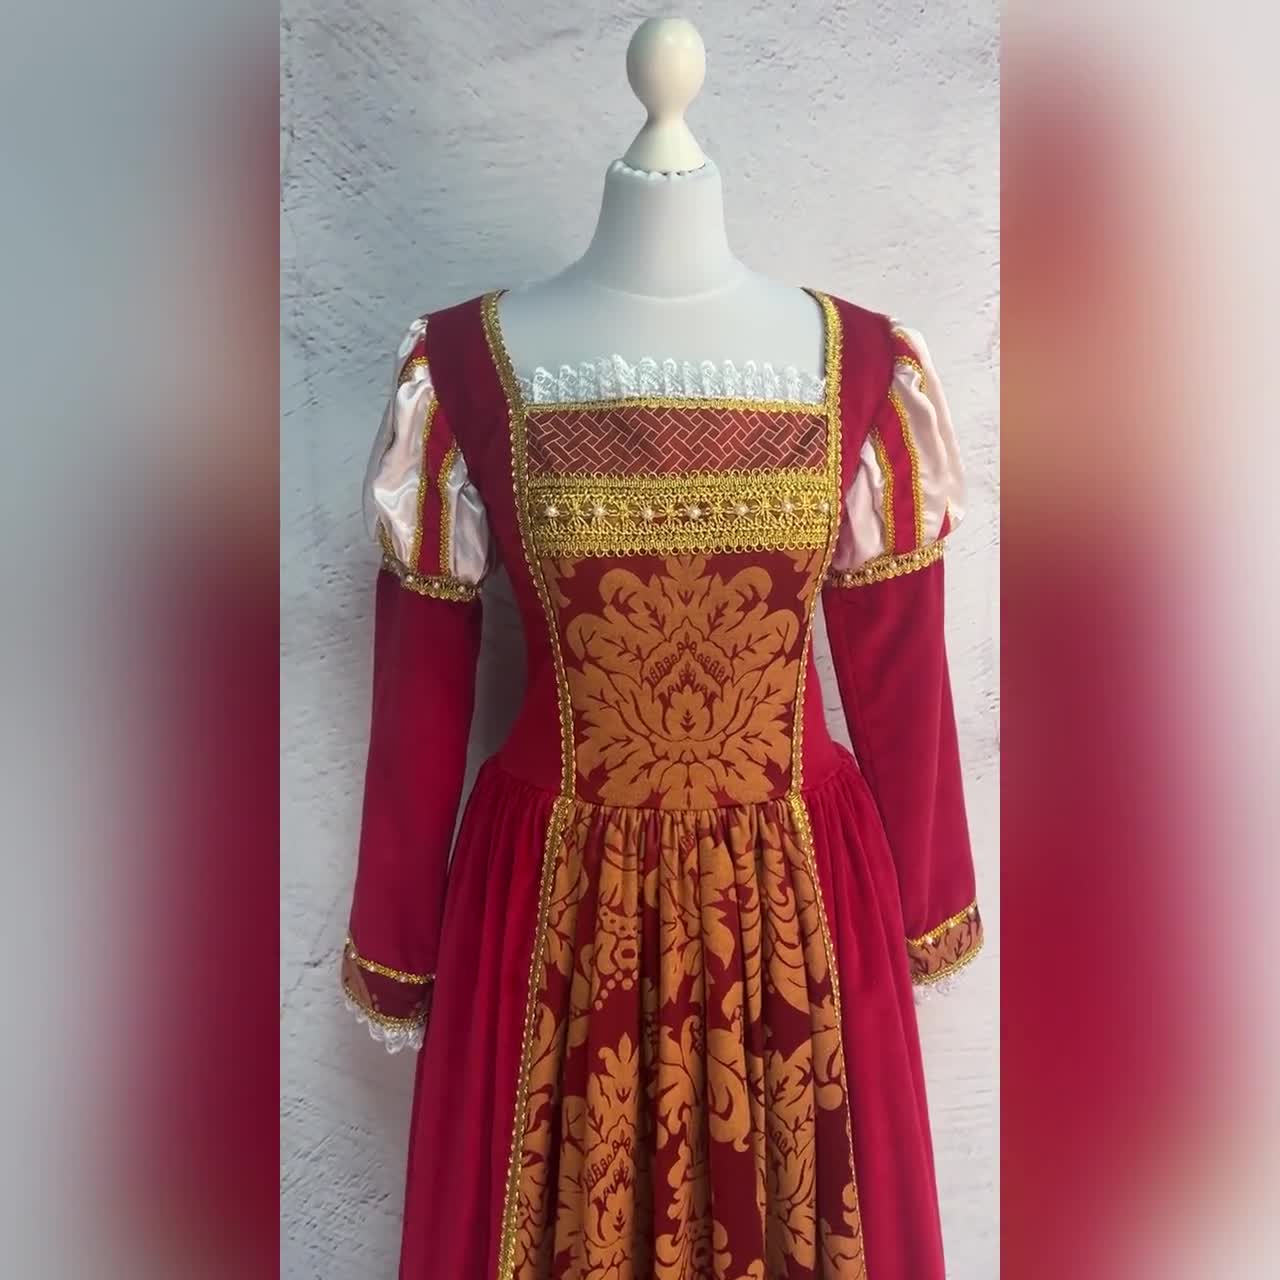 Red Italian Renaissance Dress 16th Century 